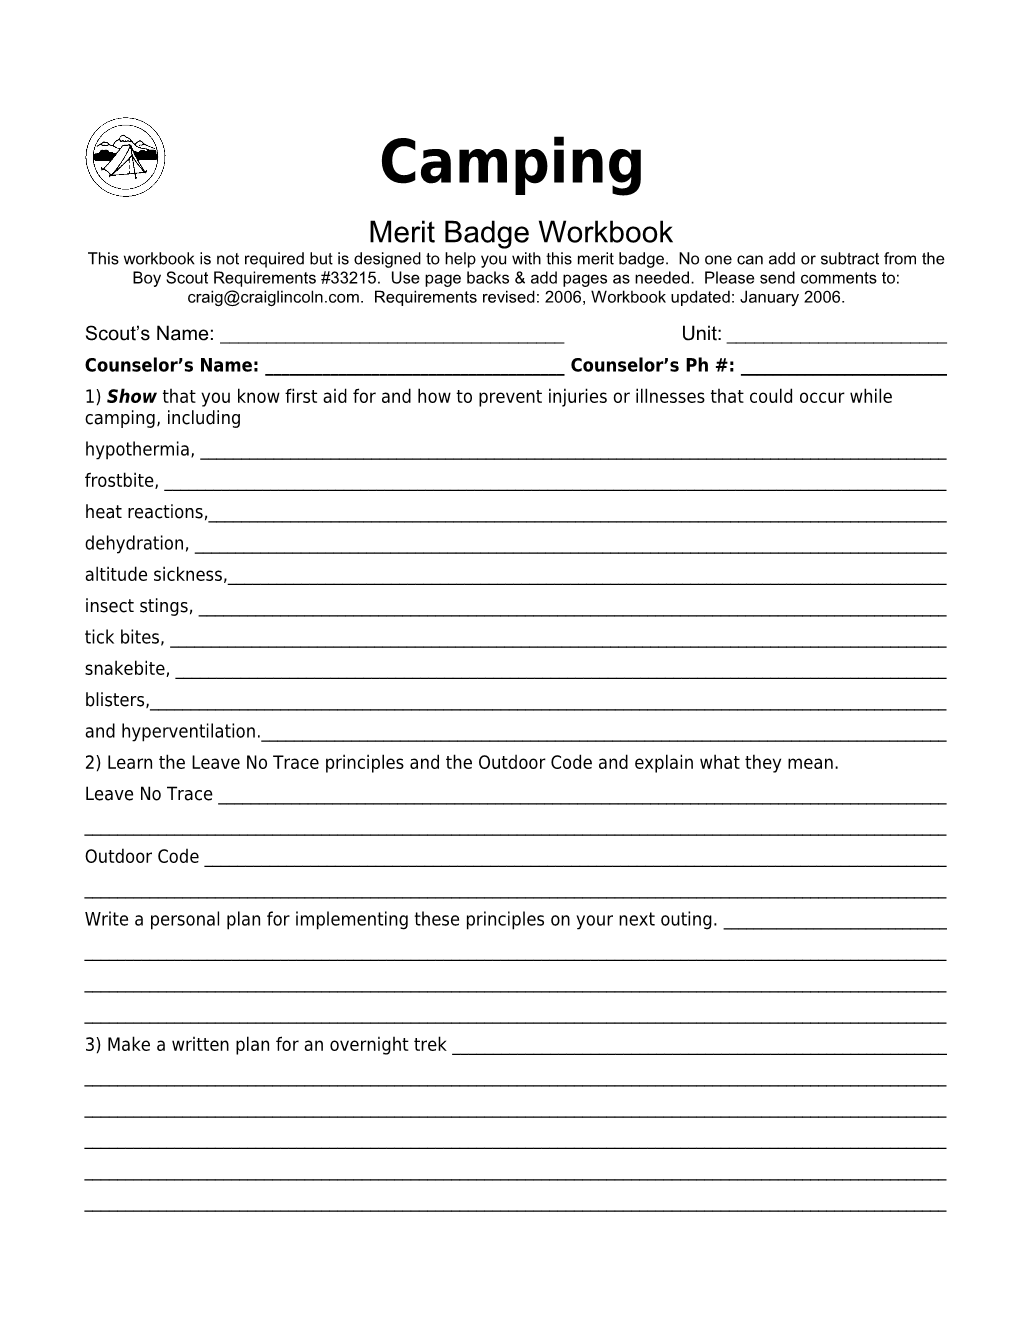 Camping P. 1 Merit Badge Workbook Scout's Name: ______